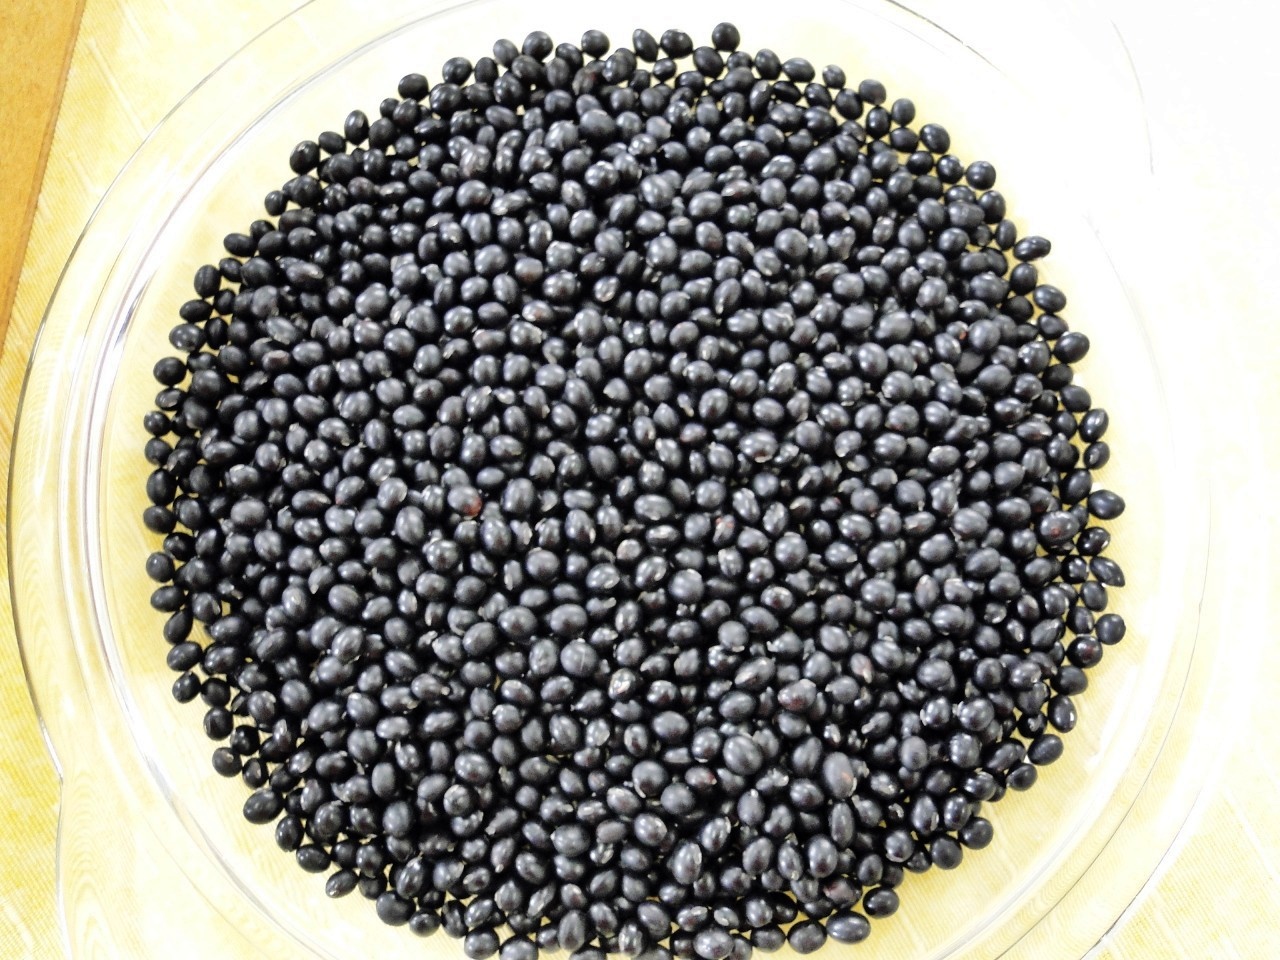 Soja preta - As propriedades funcionais da soja beneficiam a saúde dos seus consumidores